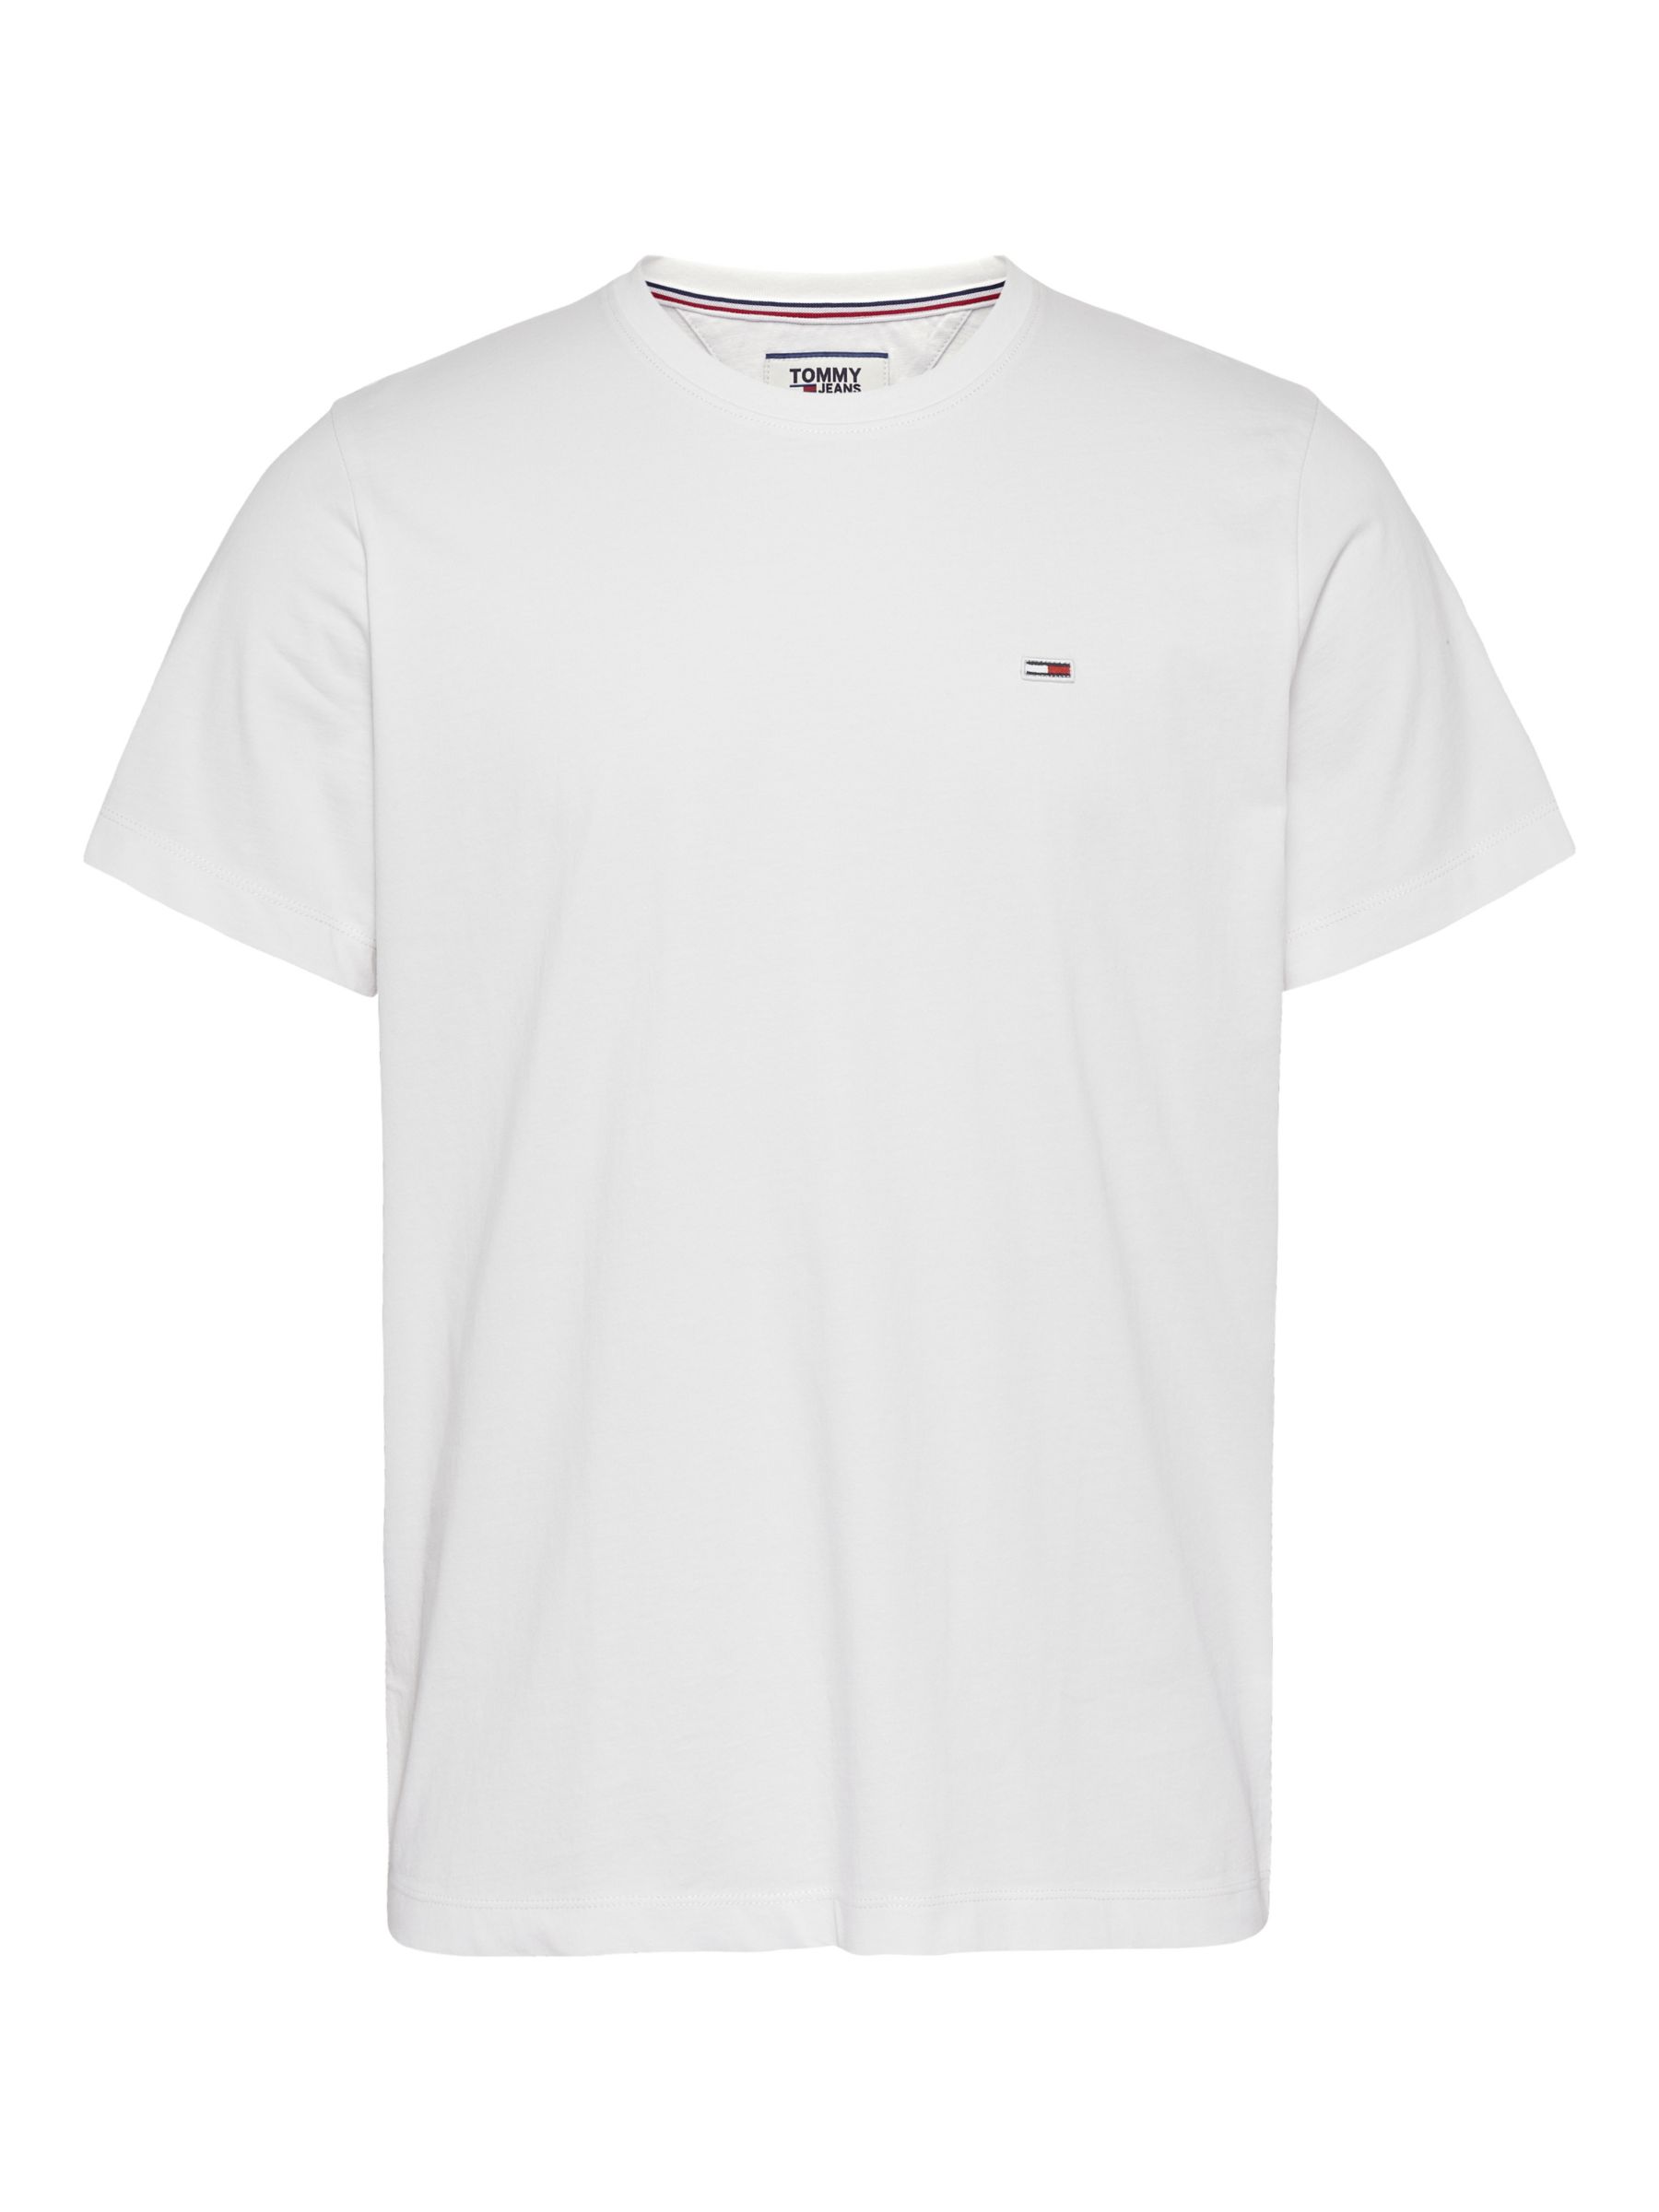 Tommy Hilfiger T-Shirts | John Lewis & Partners